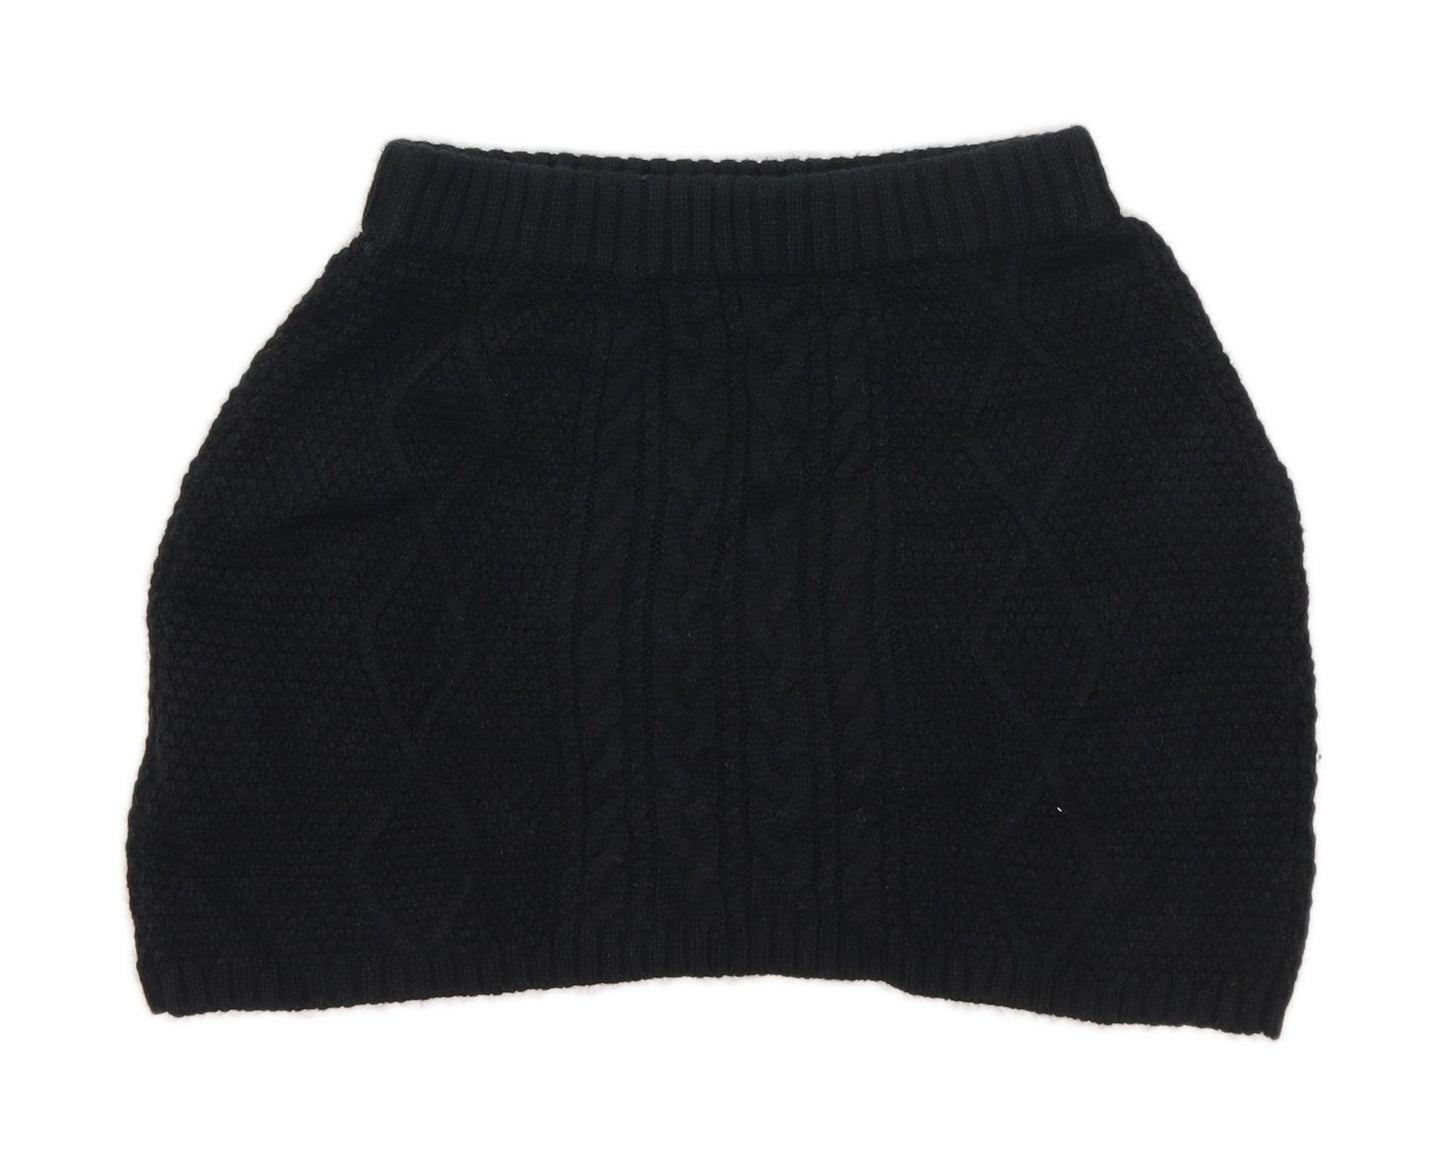 Atmosphere Womens Size 10 Textured Black Skirt (Regular)